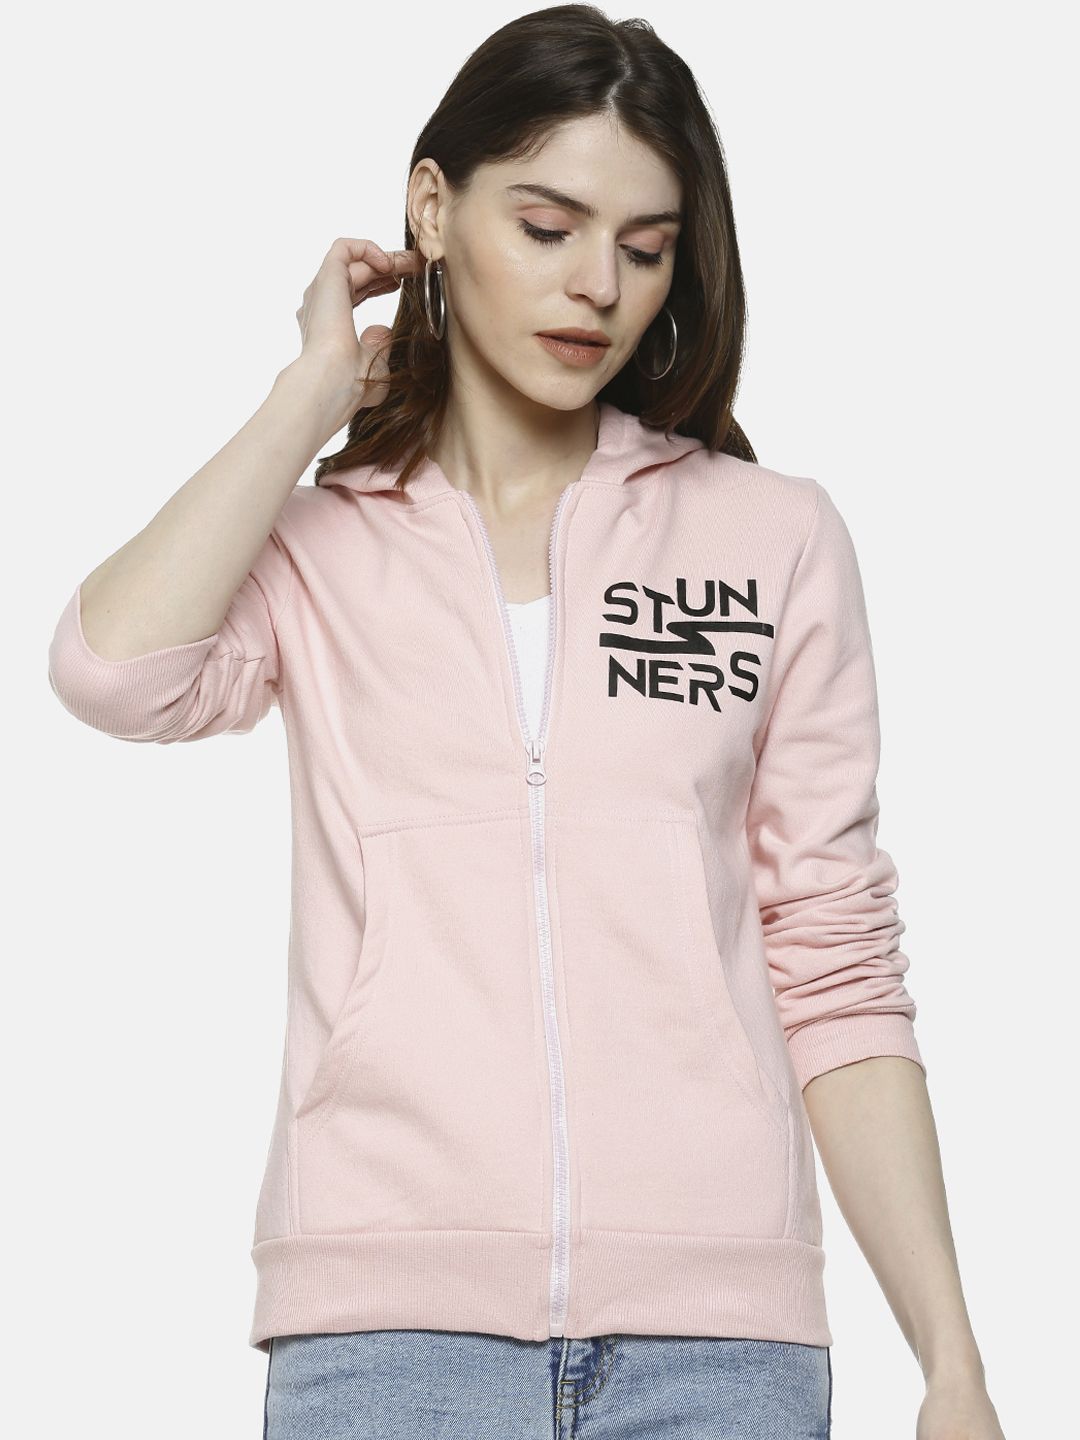 Campus Sutra Women Pink Printed Hooded Sweatshirt Price in India